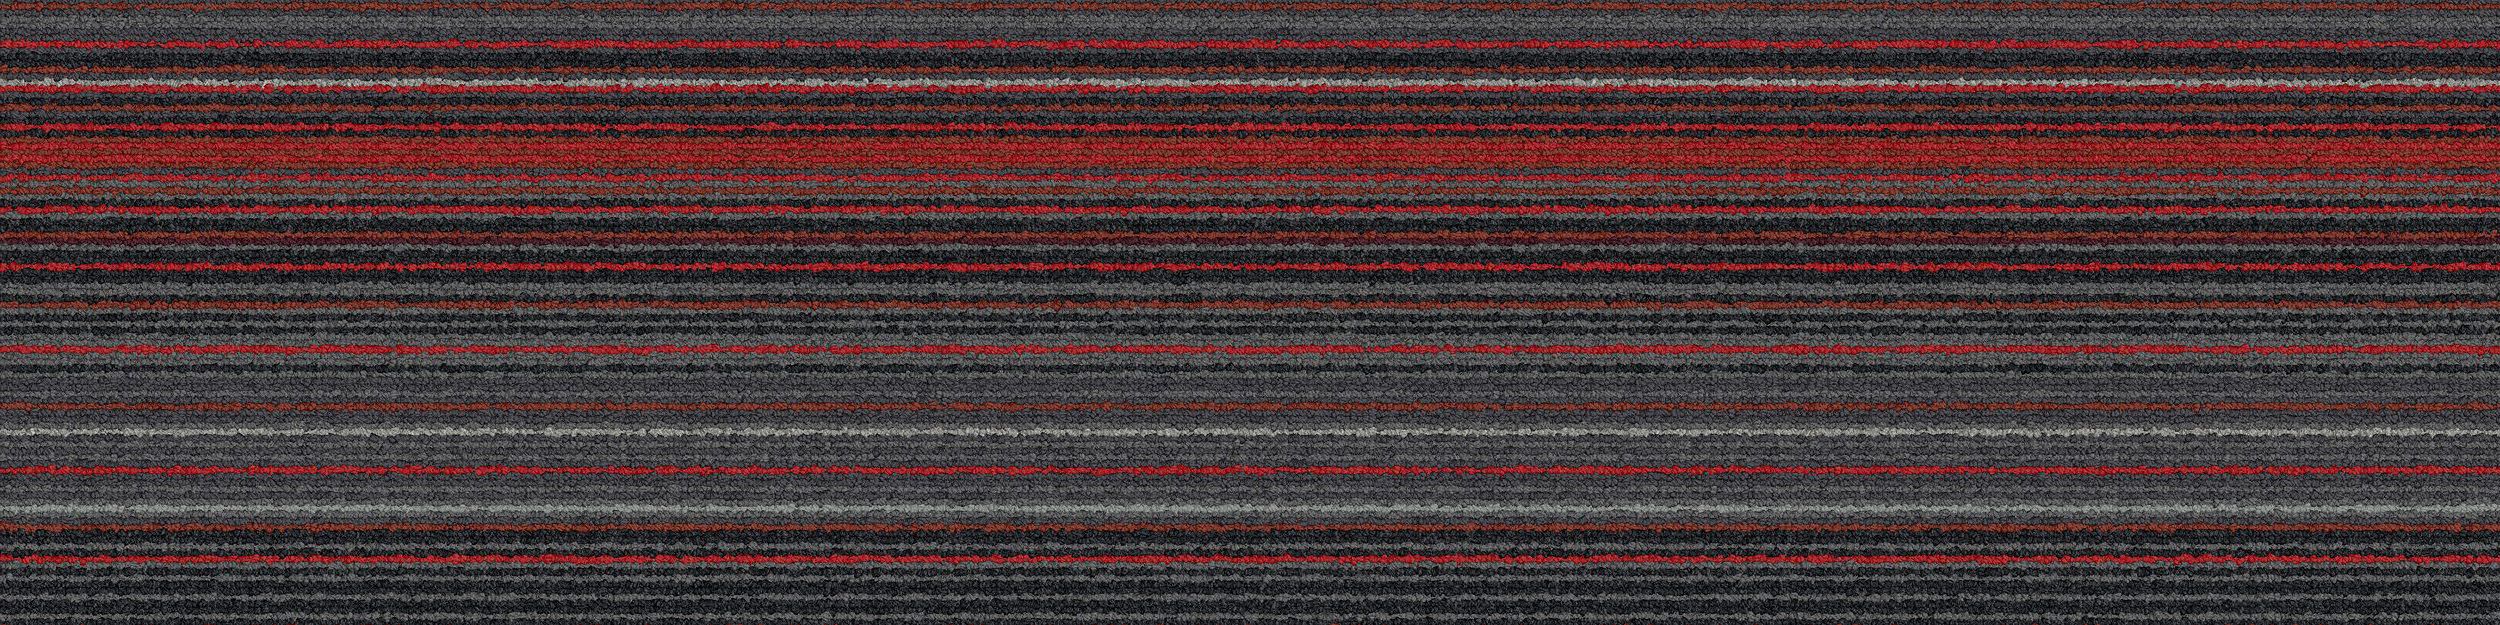 Aglow Carpet Tile in Iron Poppy imagen número 2